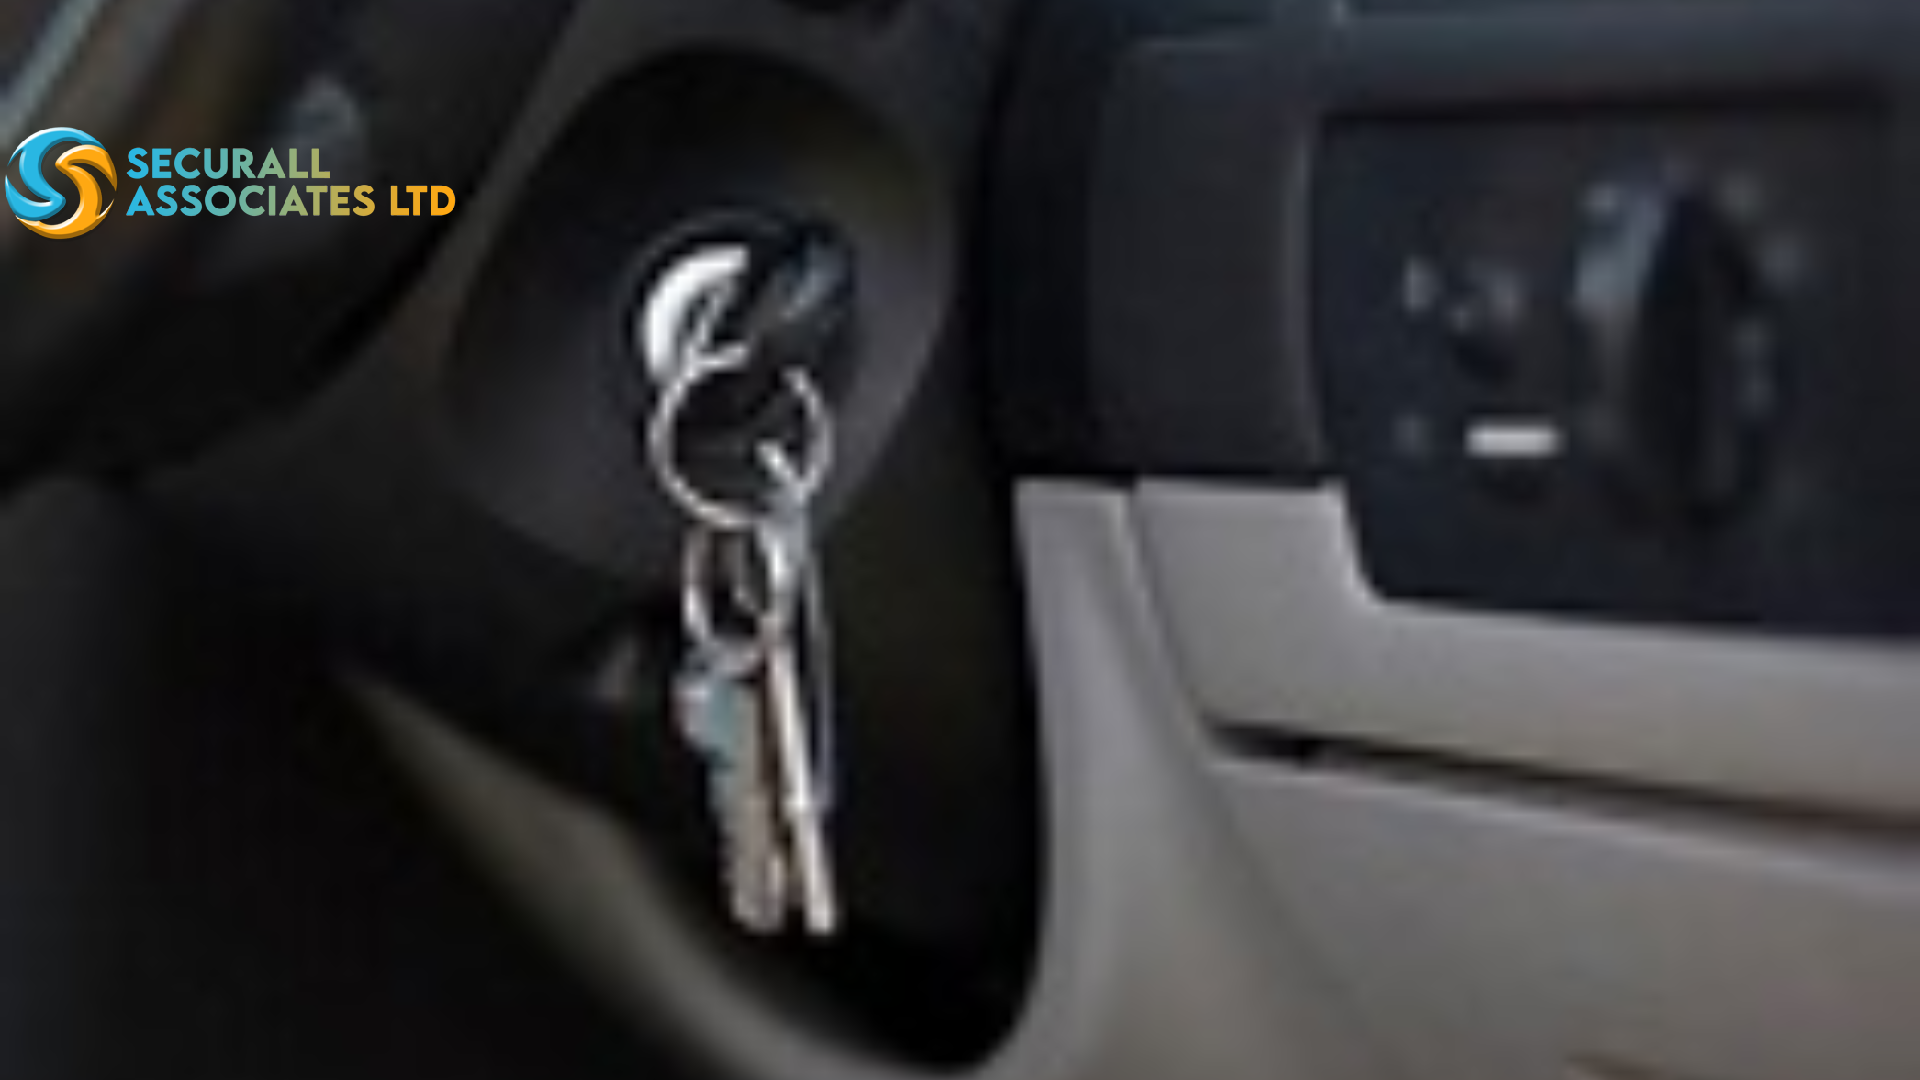 Keys Locked in the Car: